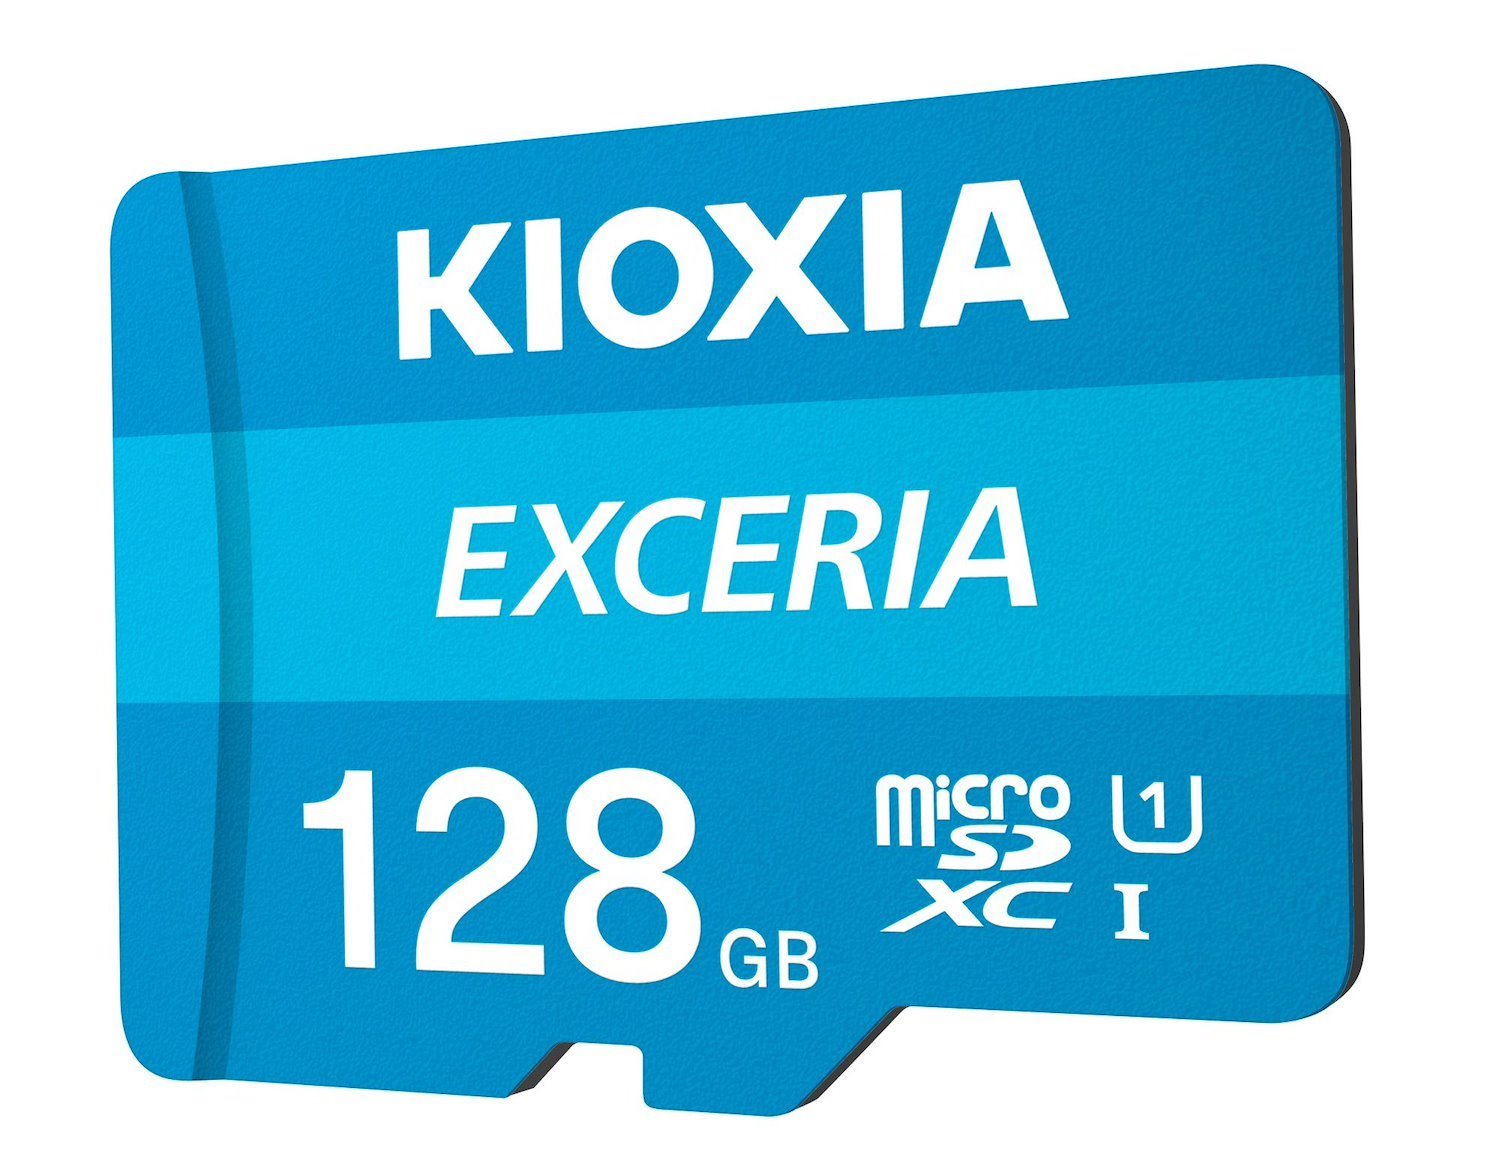 Kioxia Exceria Memory Card 128 GB MicroSDXC Class 10 Uhs-I (Kioxia 128GB Exceria U1 Class 10 microSD)